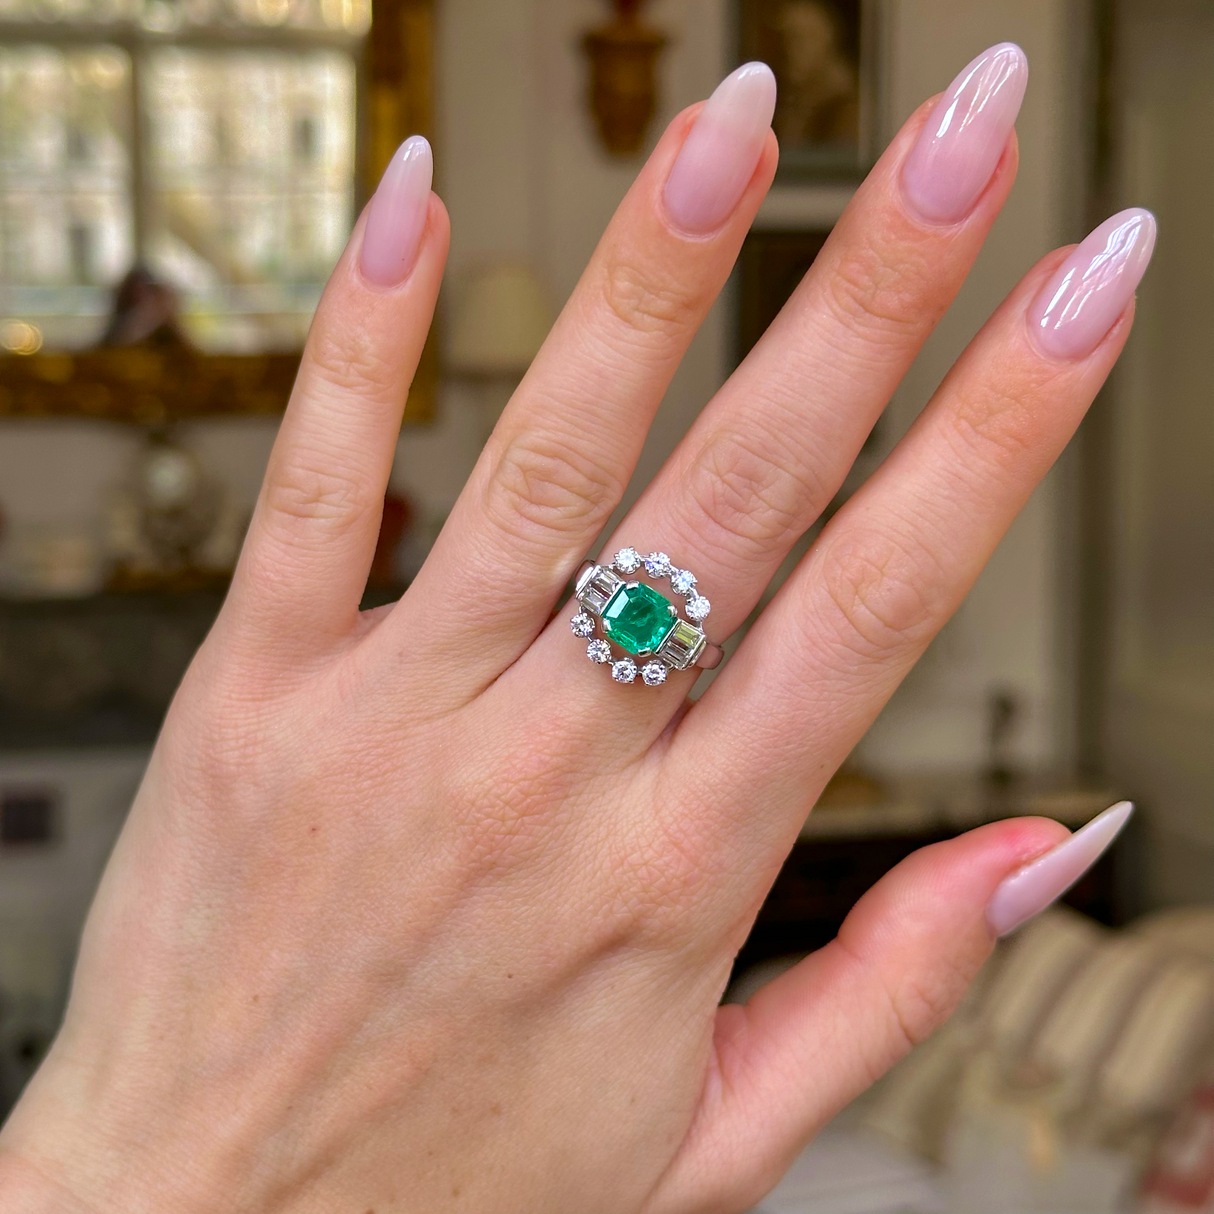 Vintage emerald and diamond ring worn on hand. 